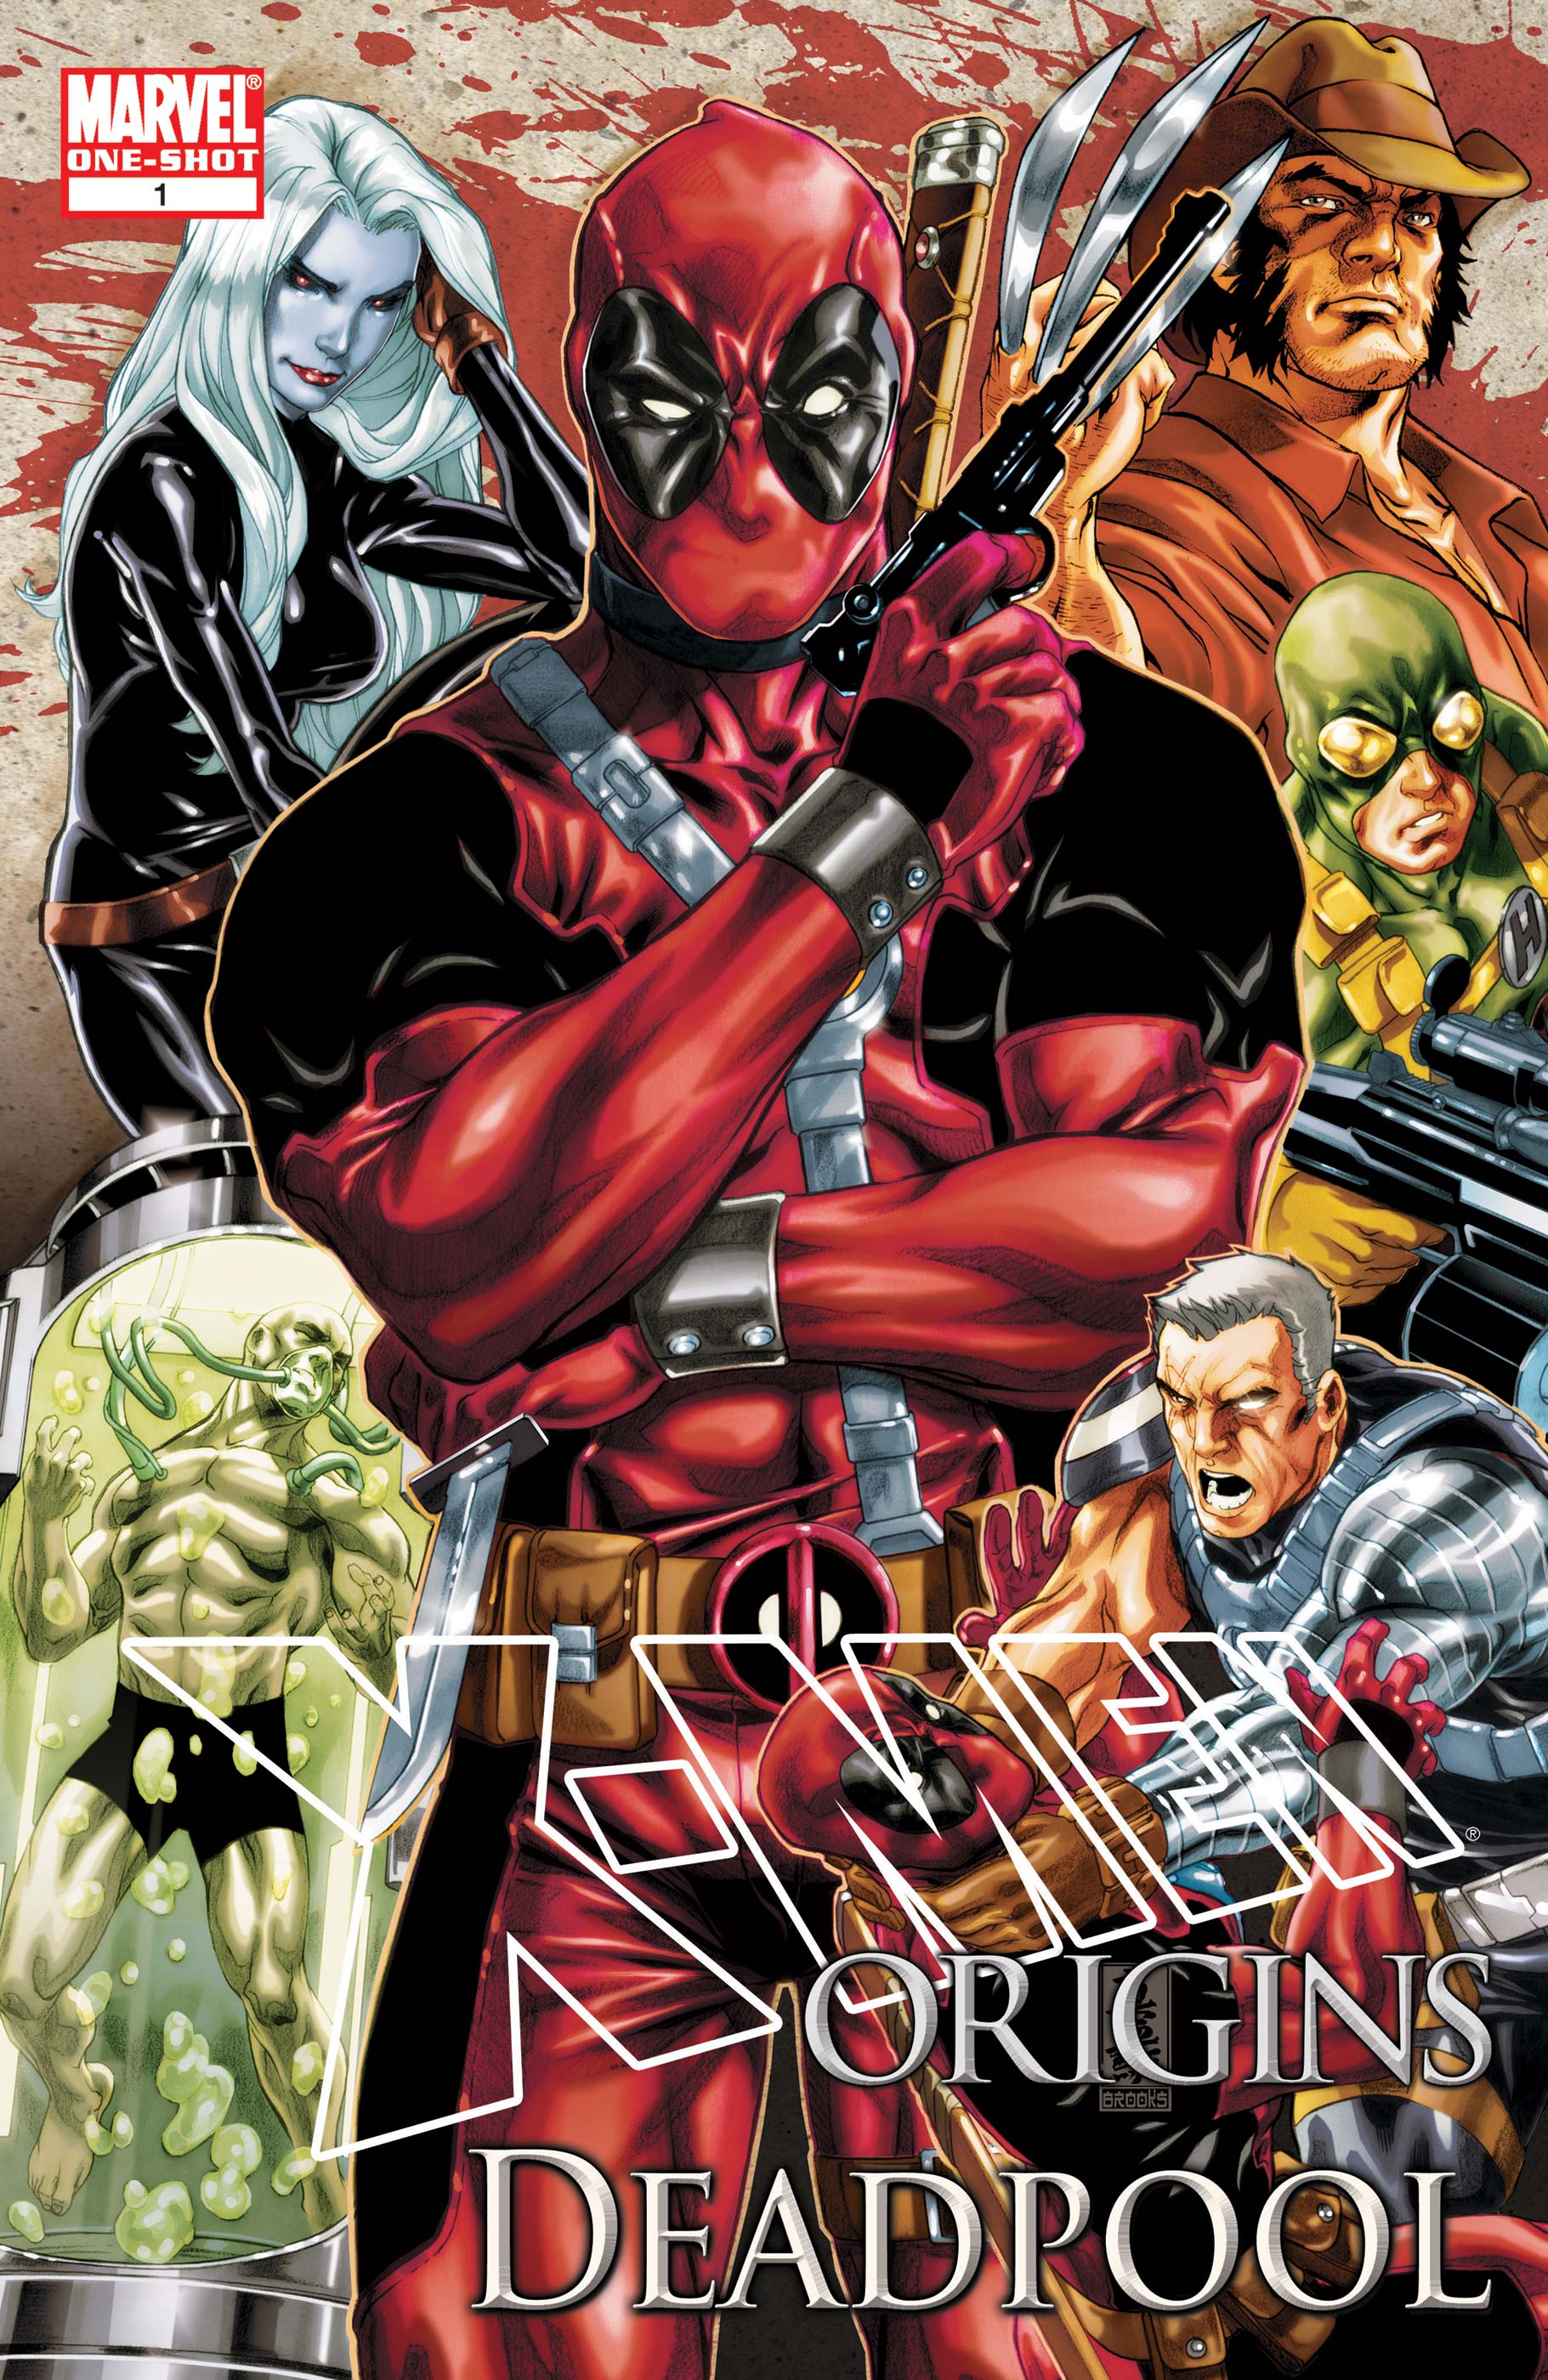 X-Men Origins: Deadpool (2010) #1